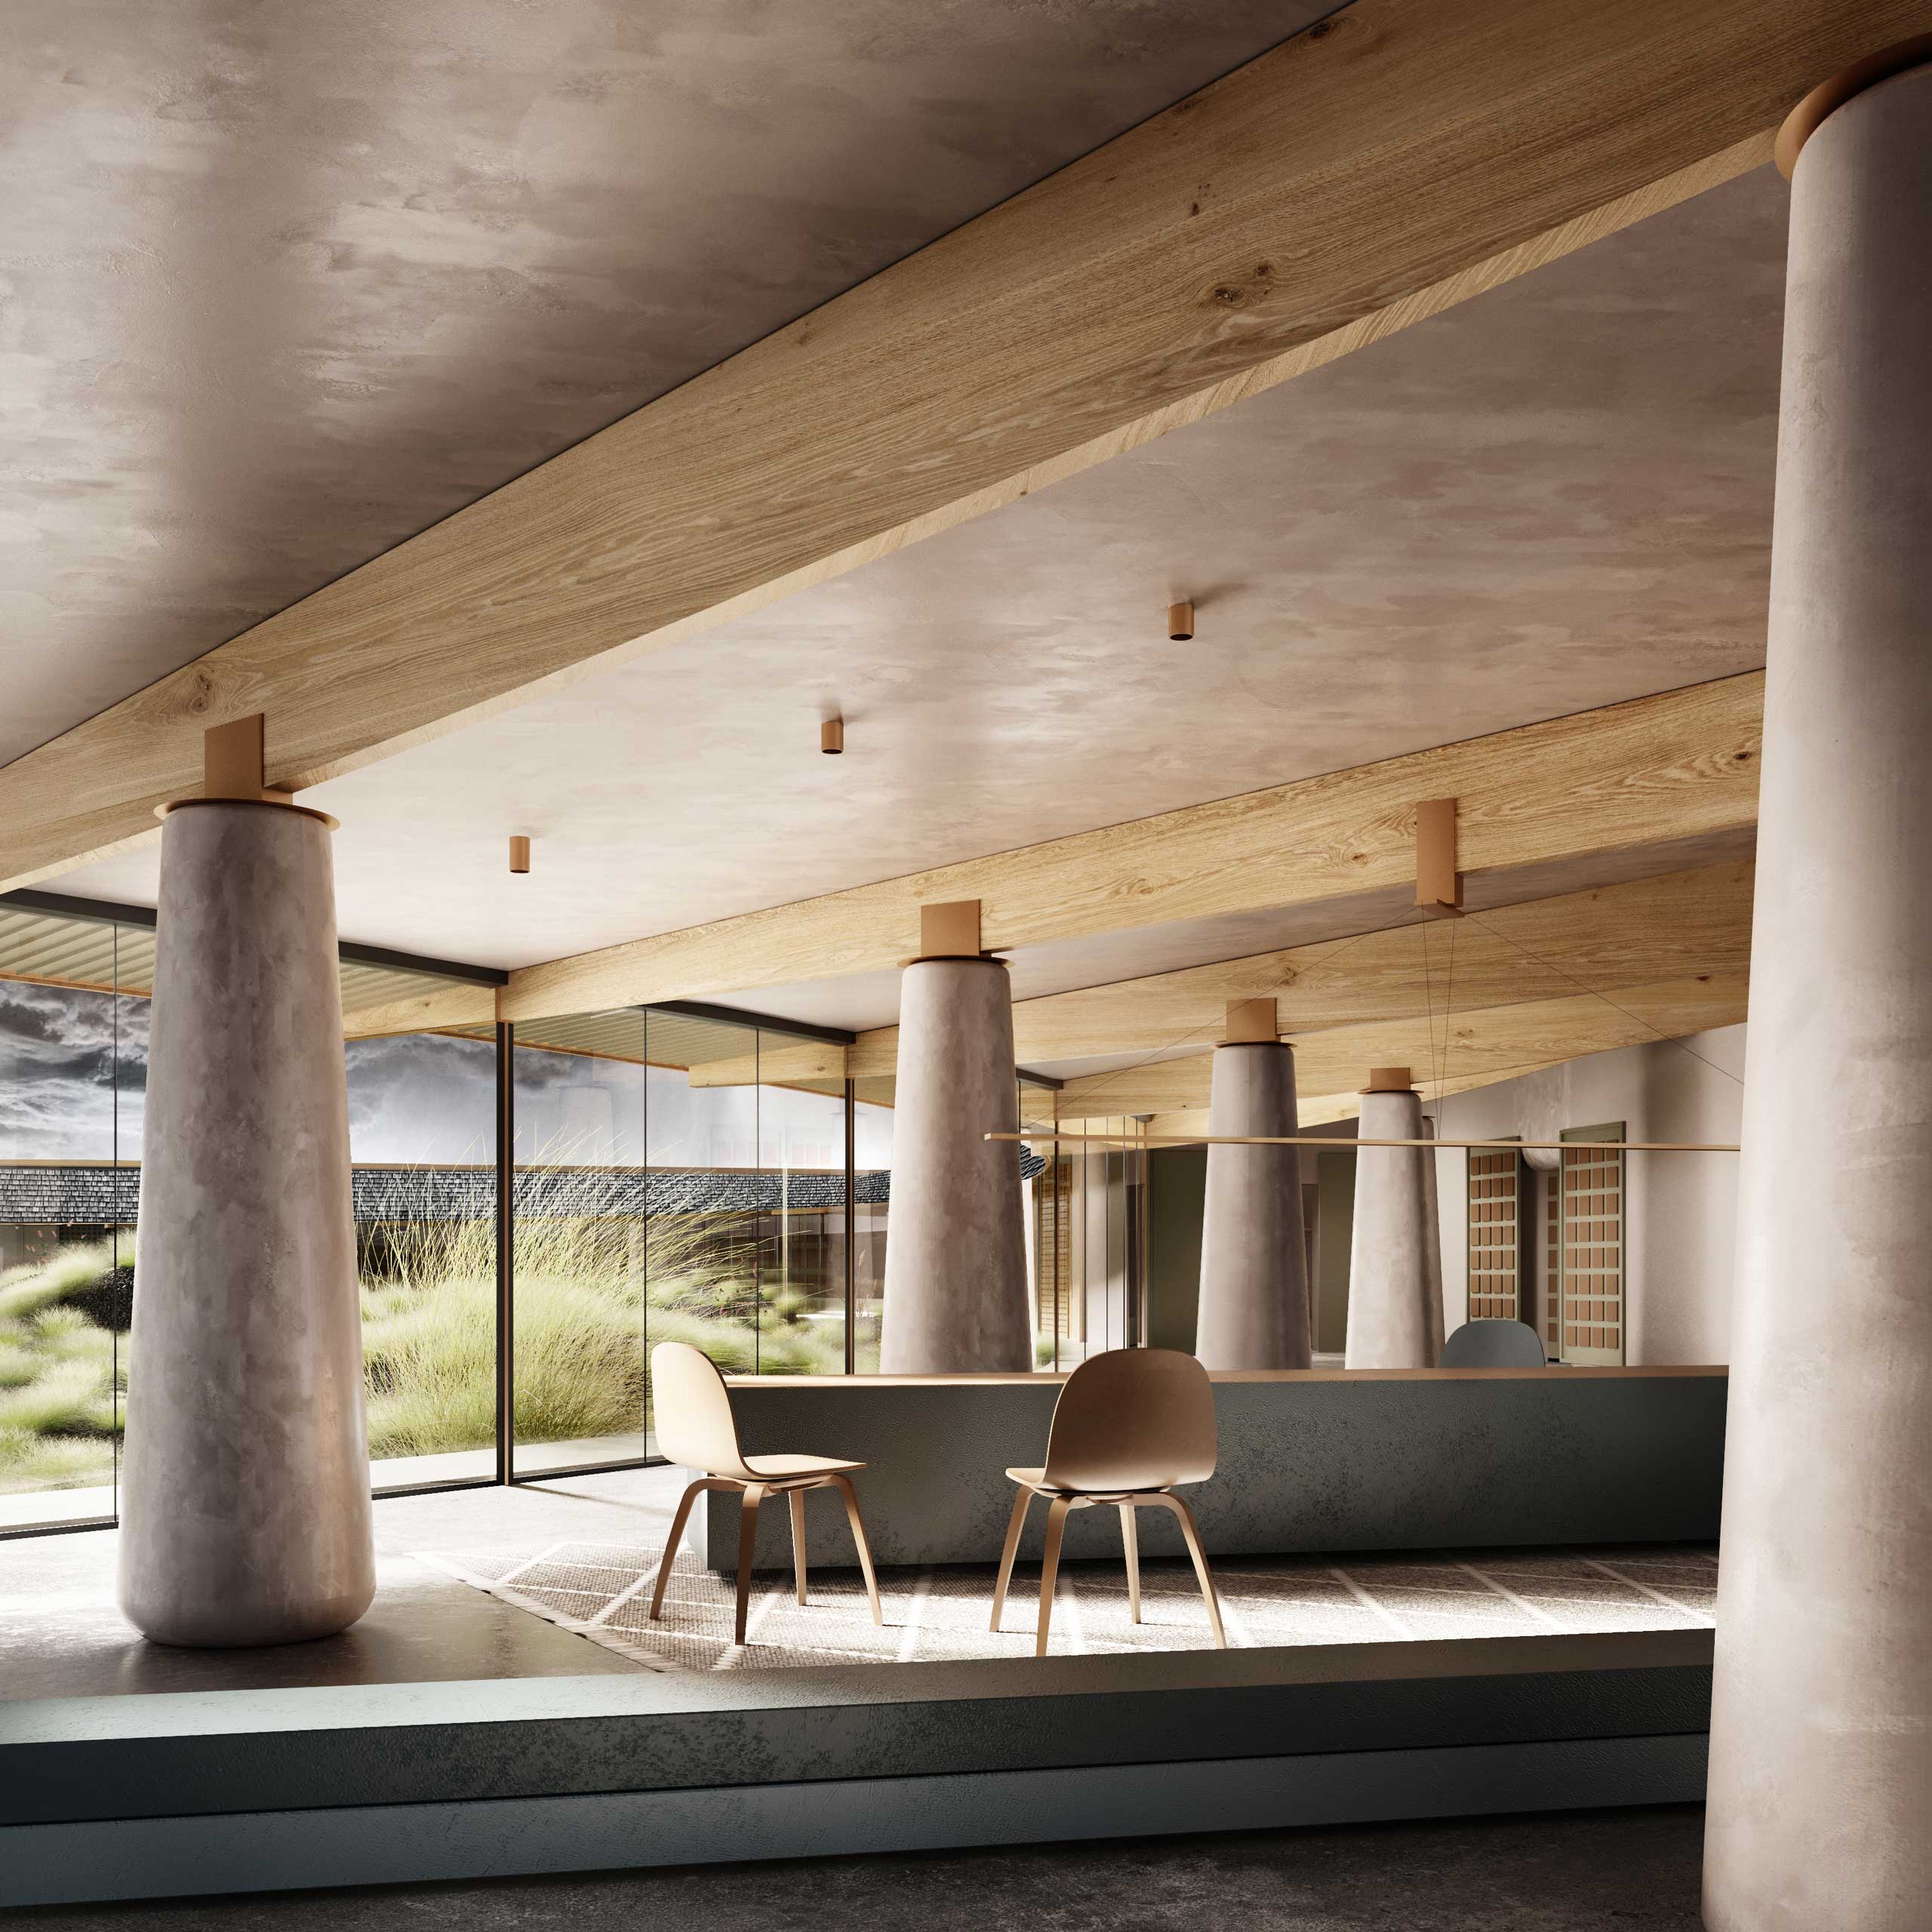 School enclosure rendering with concrete pillars and wood beams.